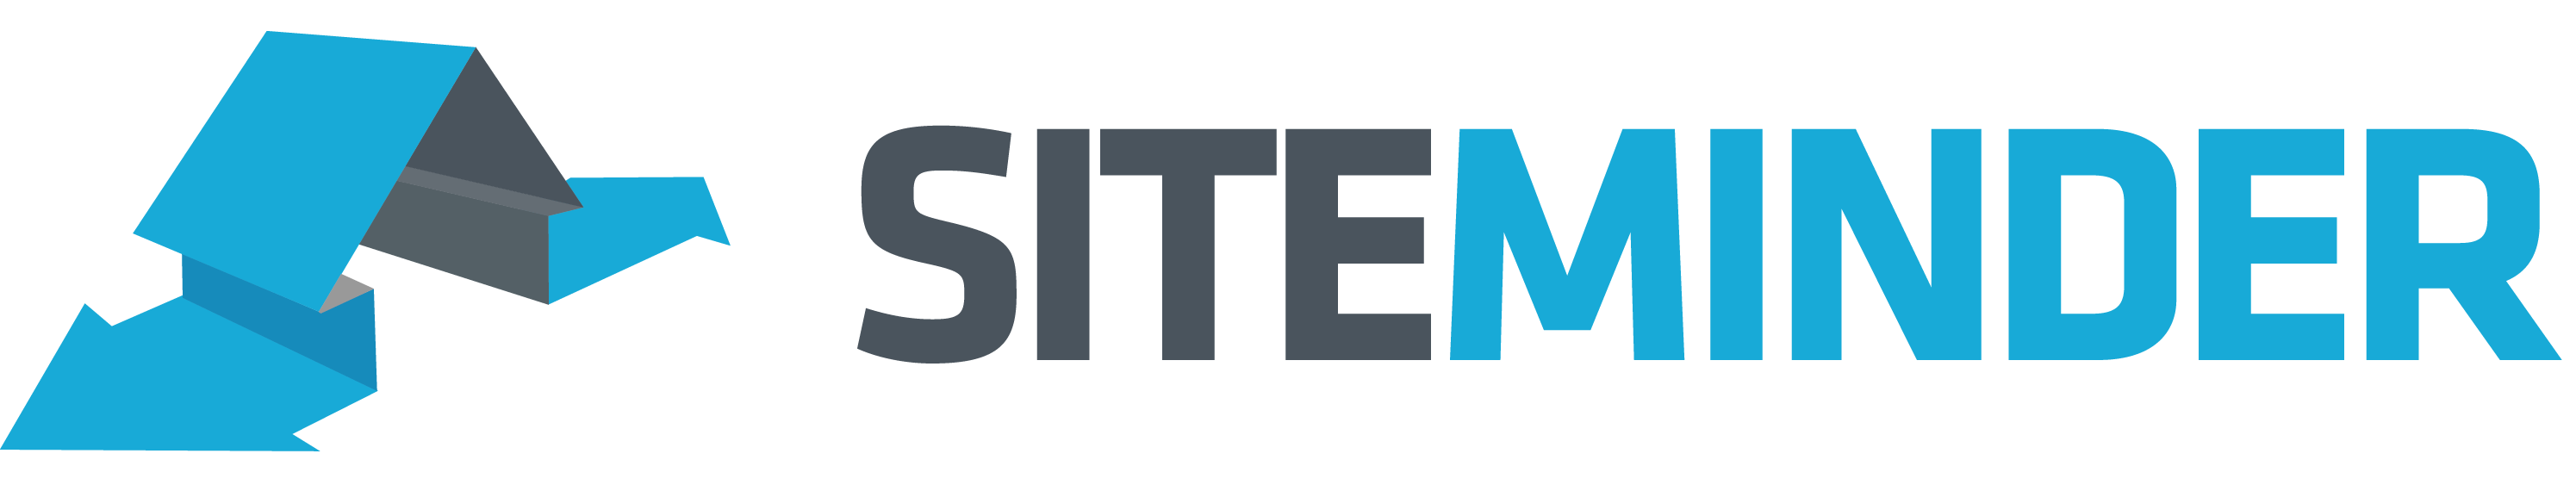 Logo_SiteMinder